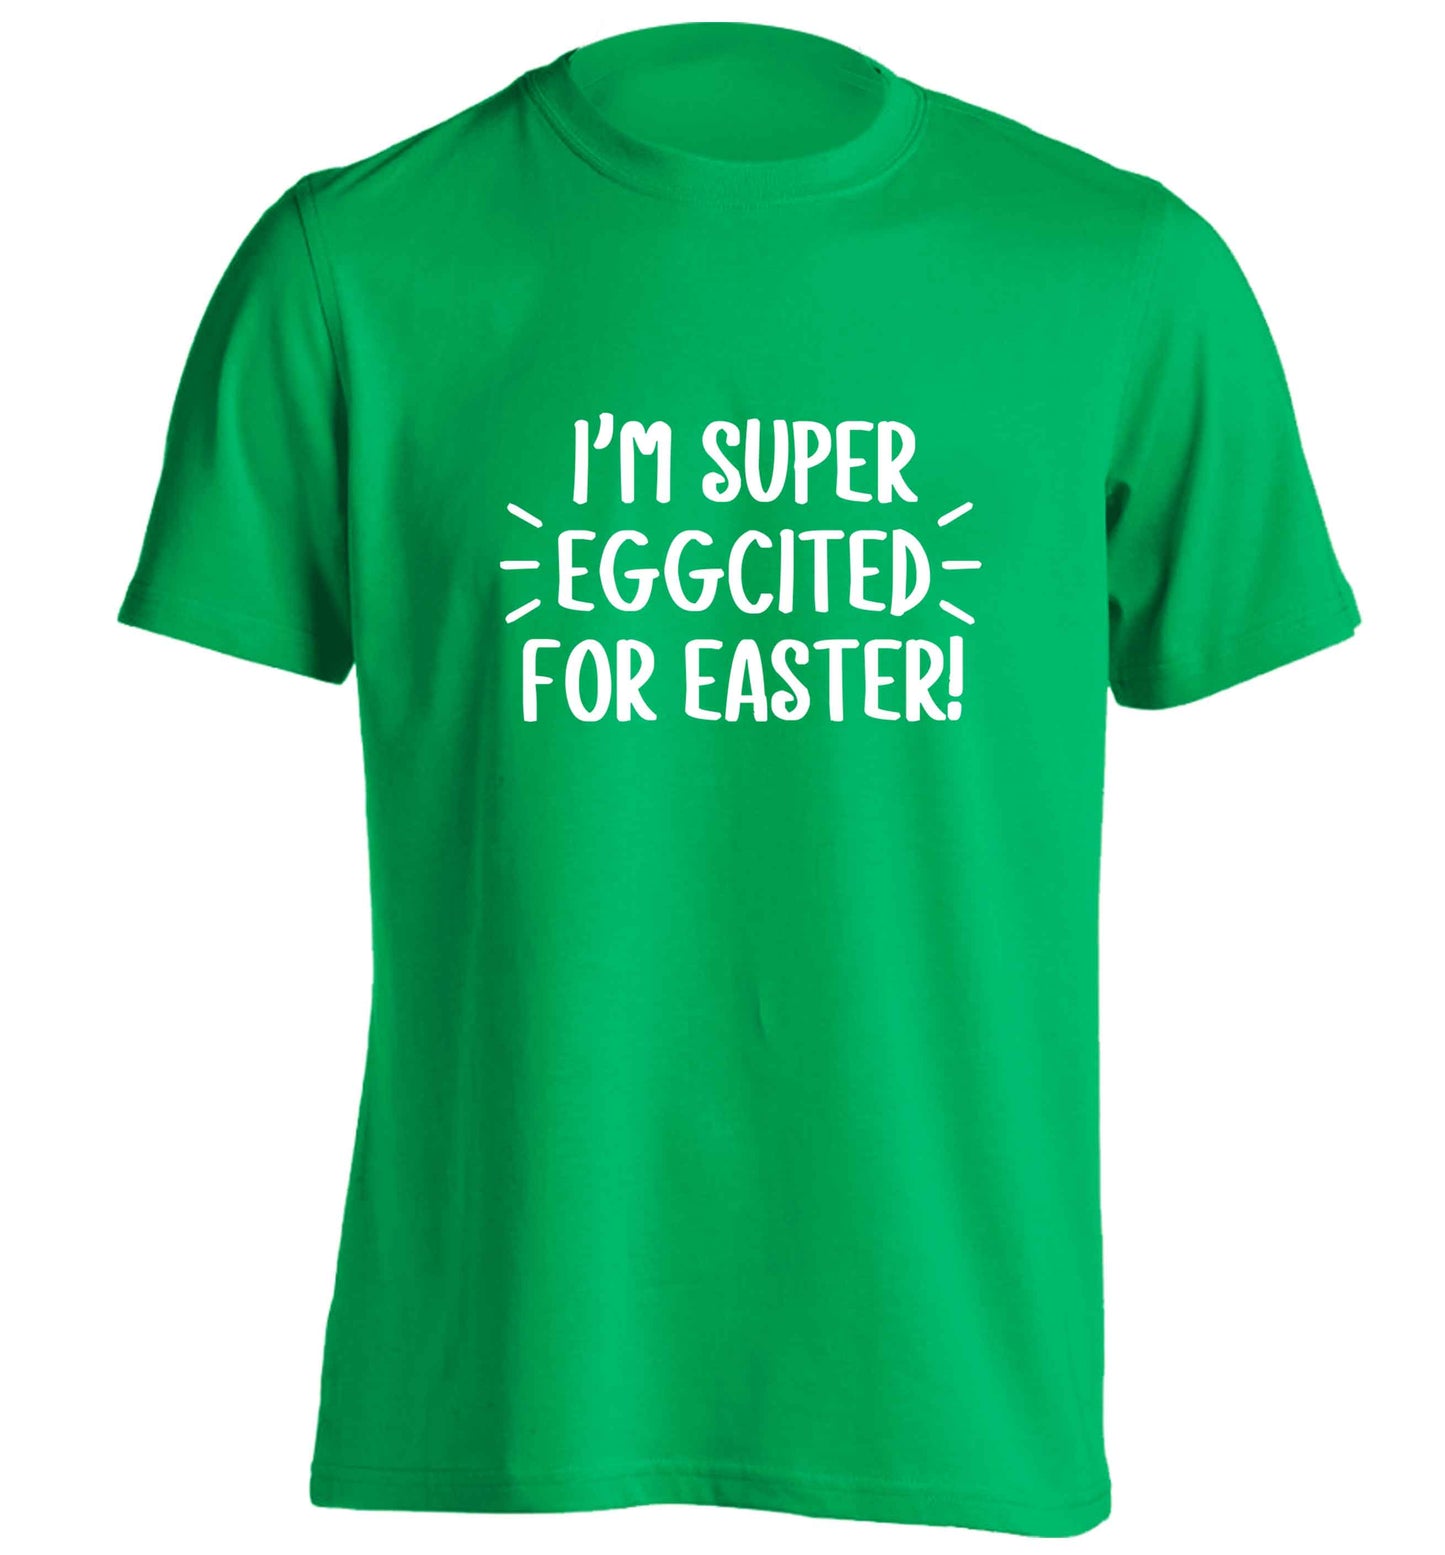 I'm super eggcited for Easter adults unisex green Tshirt 2XL